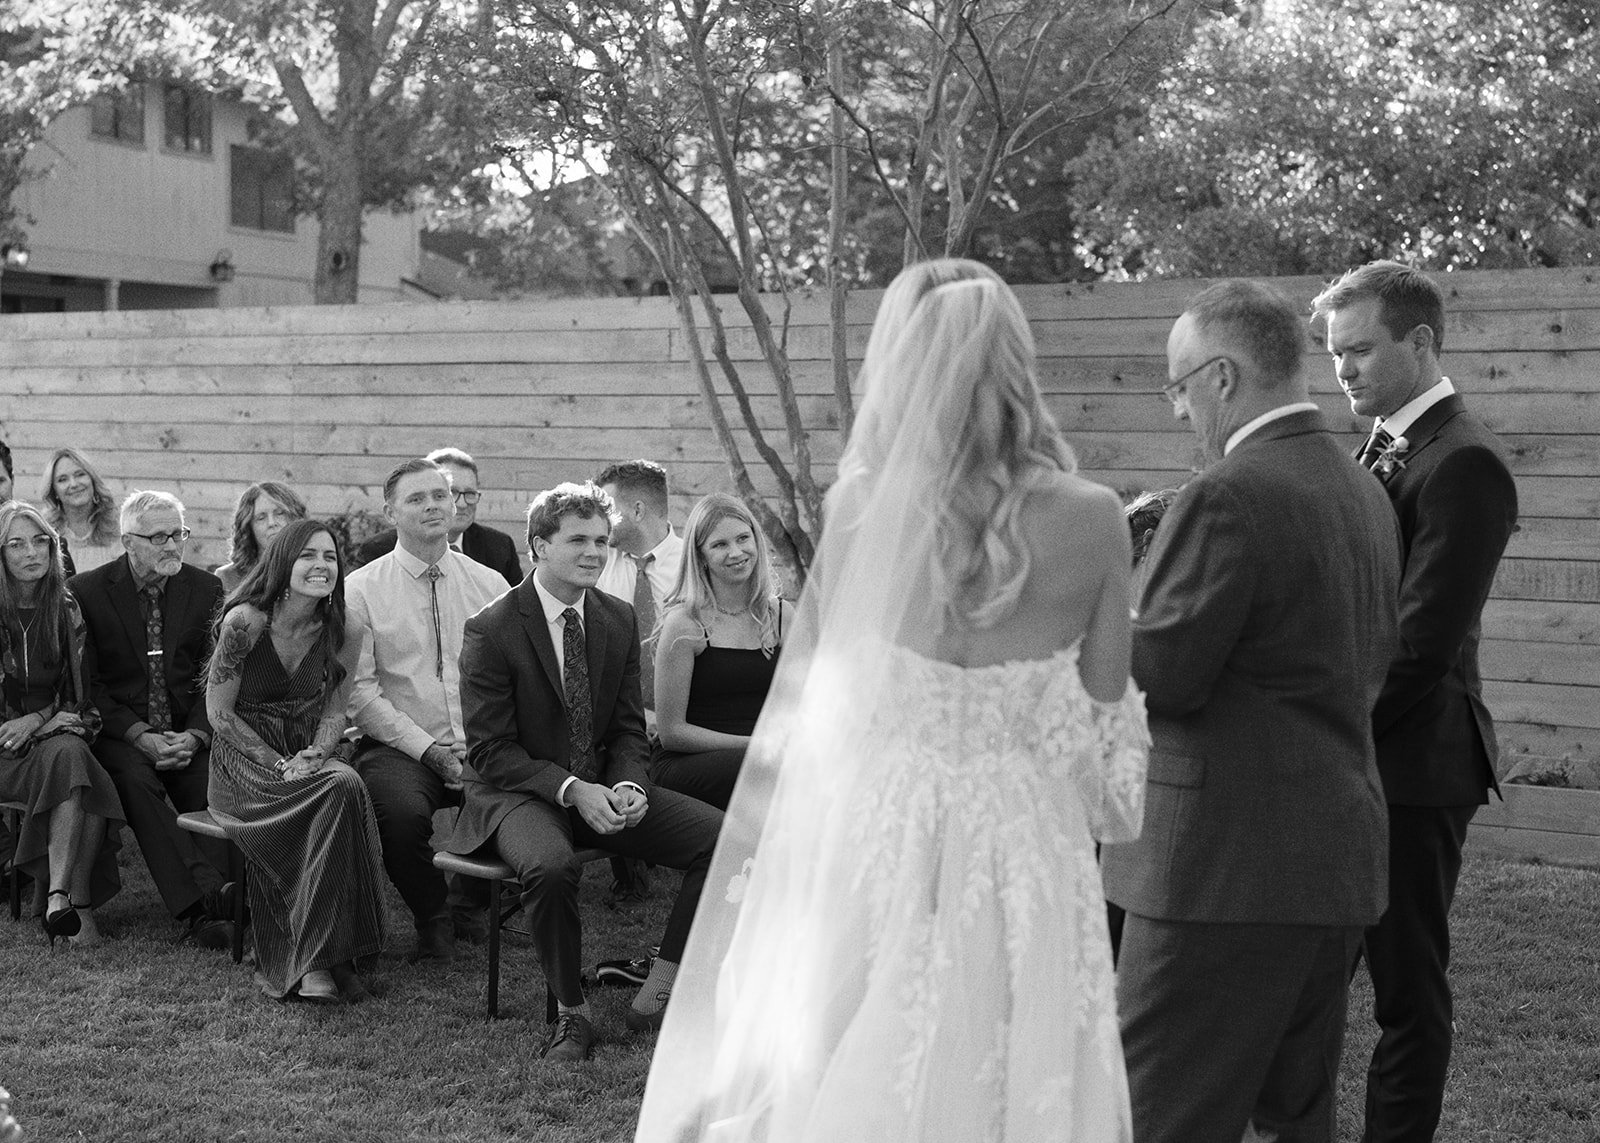 Best-Austin-Wedding-Photographers-Elopement-Film-35mm-Asheville-Santa-Barbara-Backyard-41.jpg